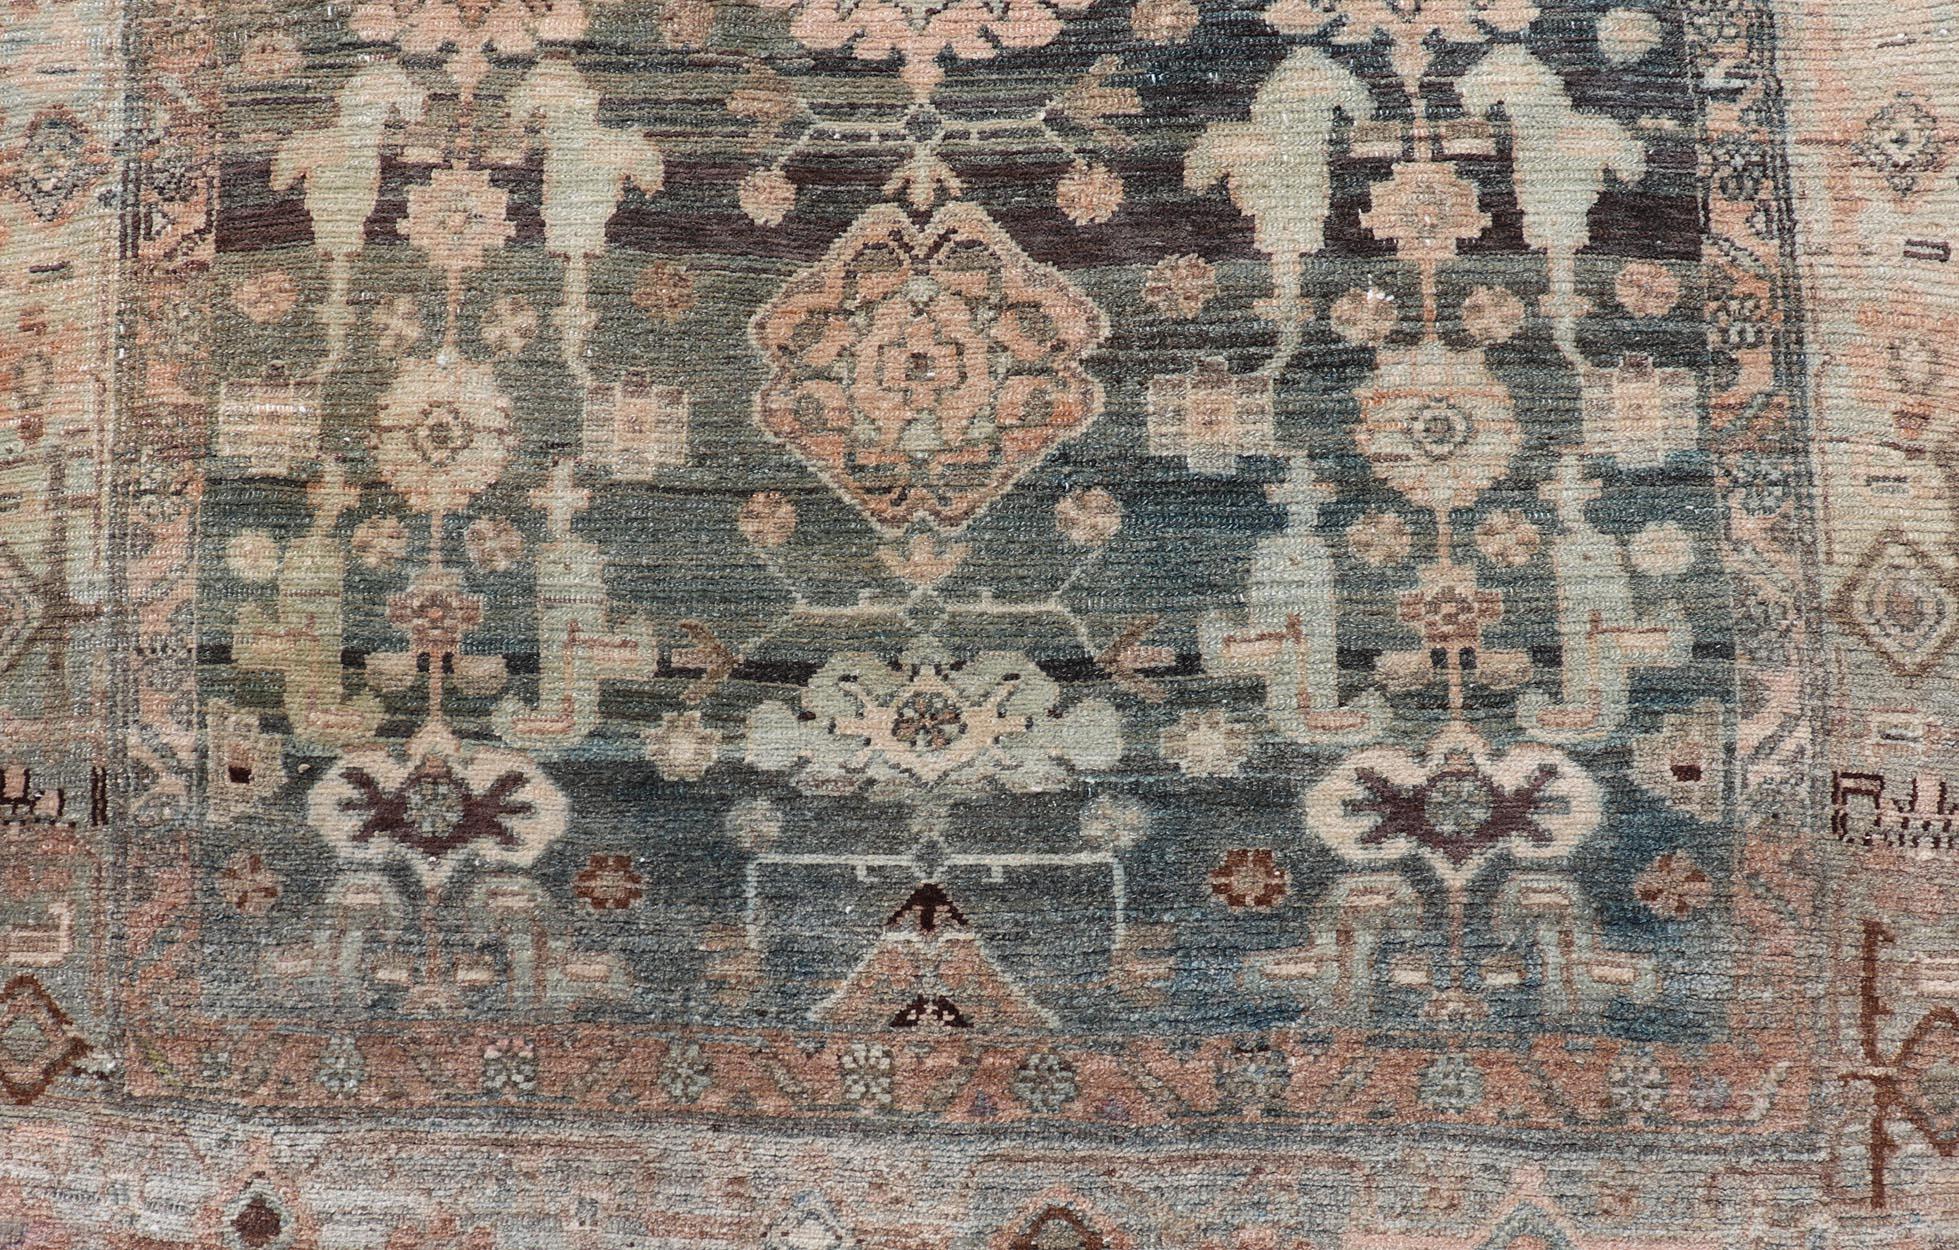 Antique Persian Nahavand Tribal rug, rug EMB-9589-P13576, country of origin / type: Persian / Nahavand, circa Early-20th Century.

Measures: 3'10 x 6'6.